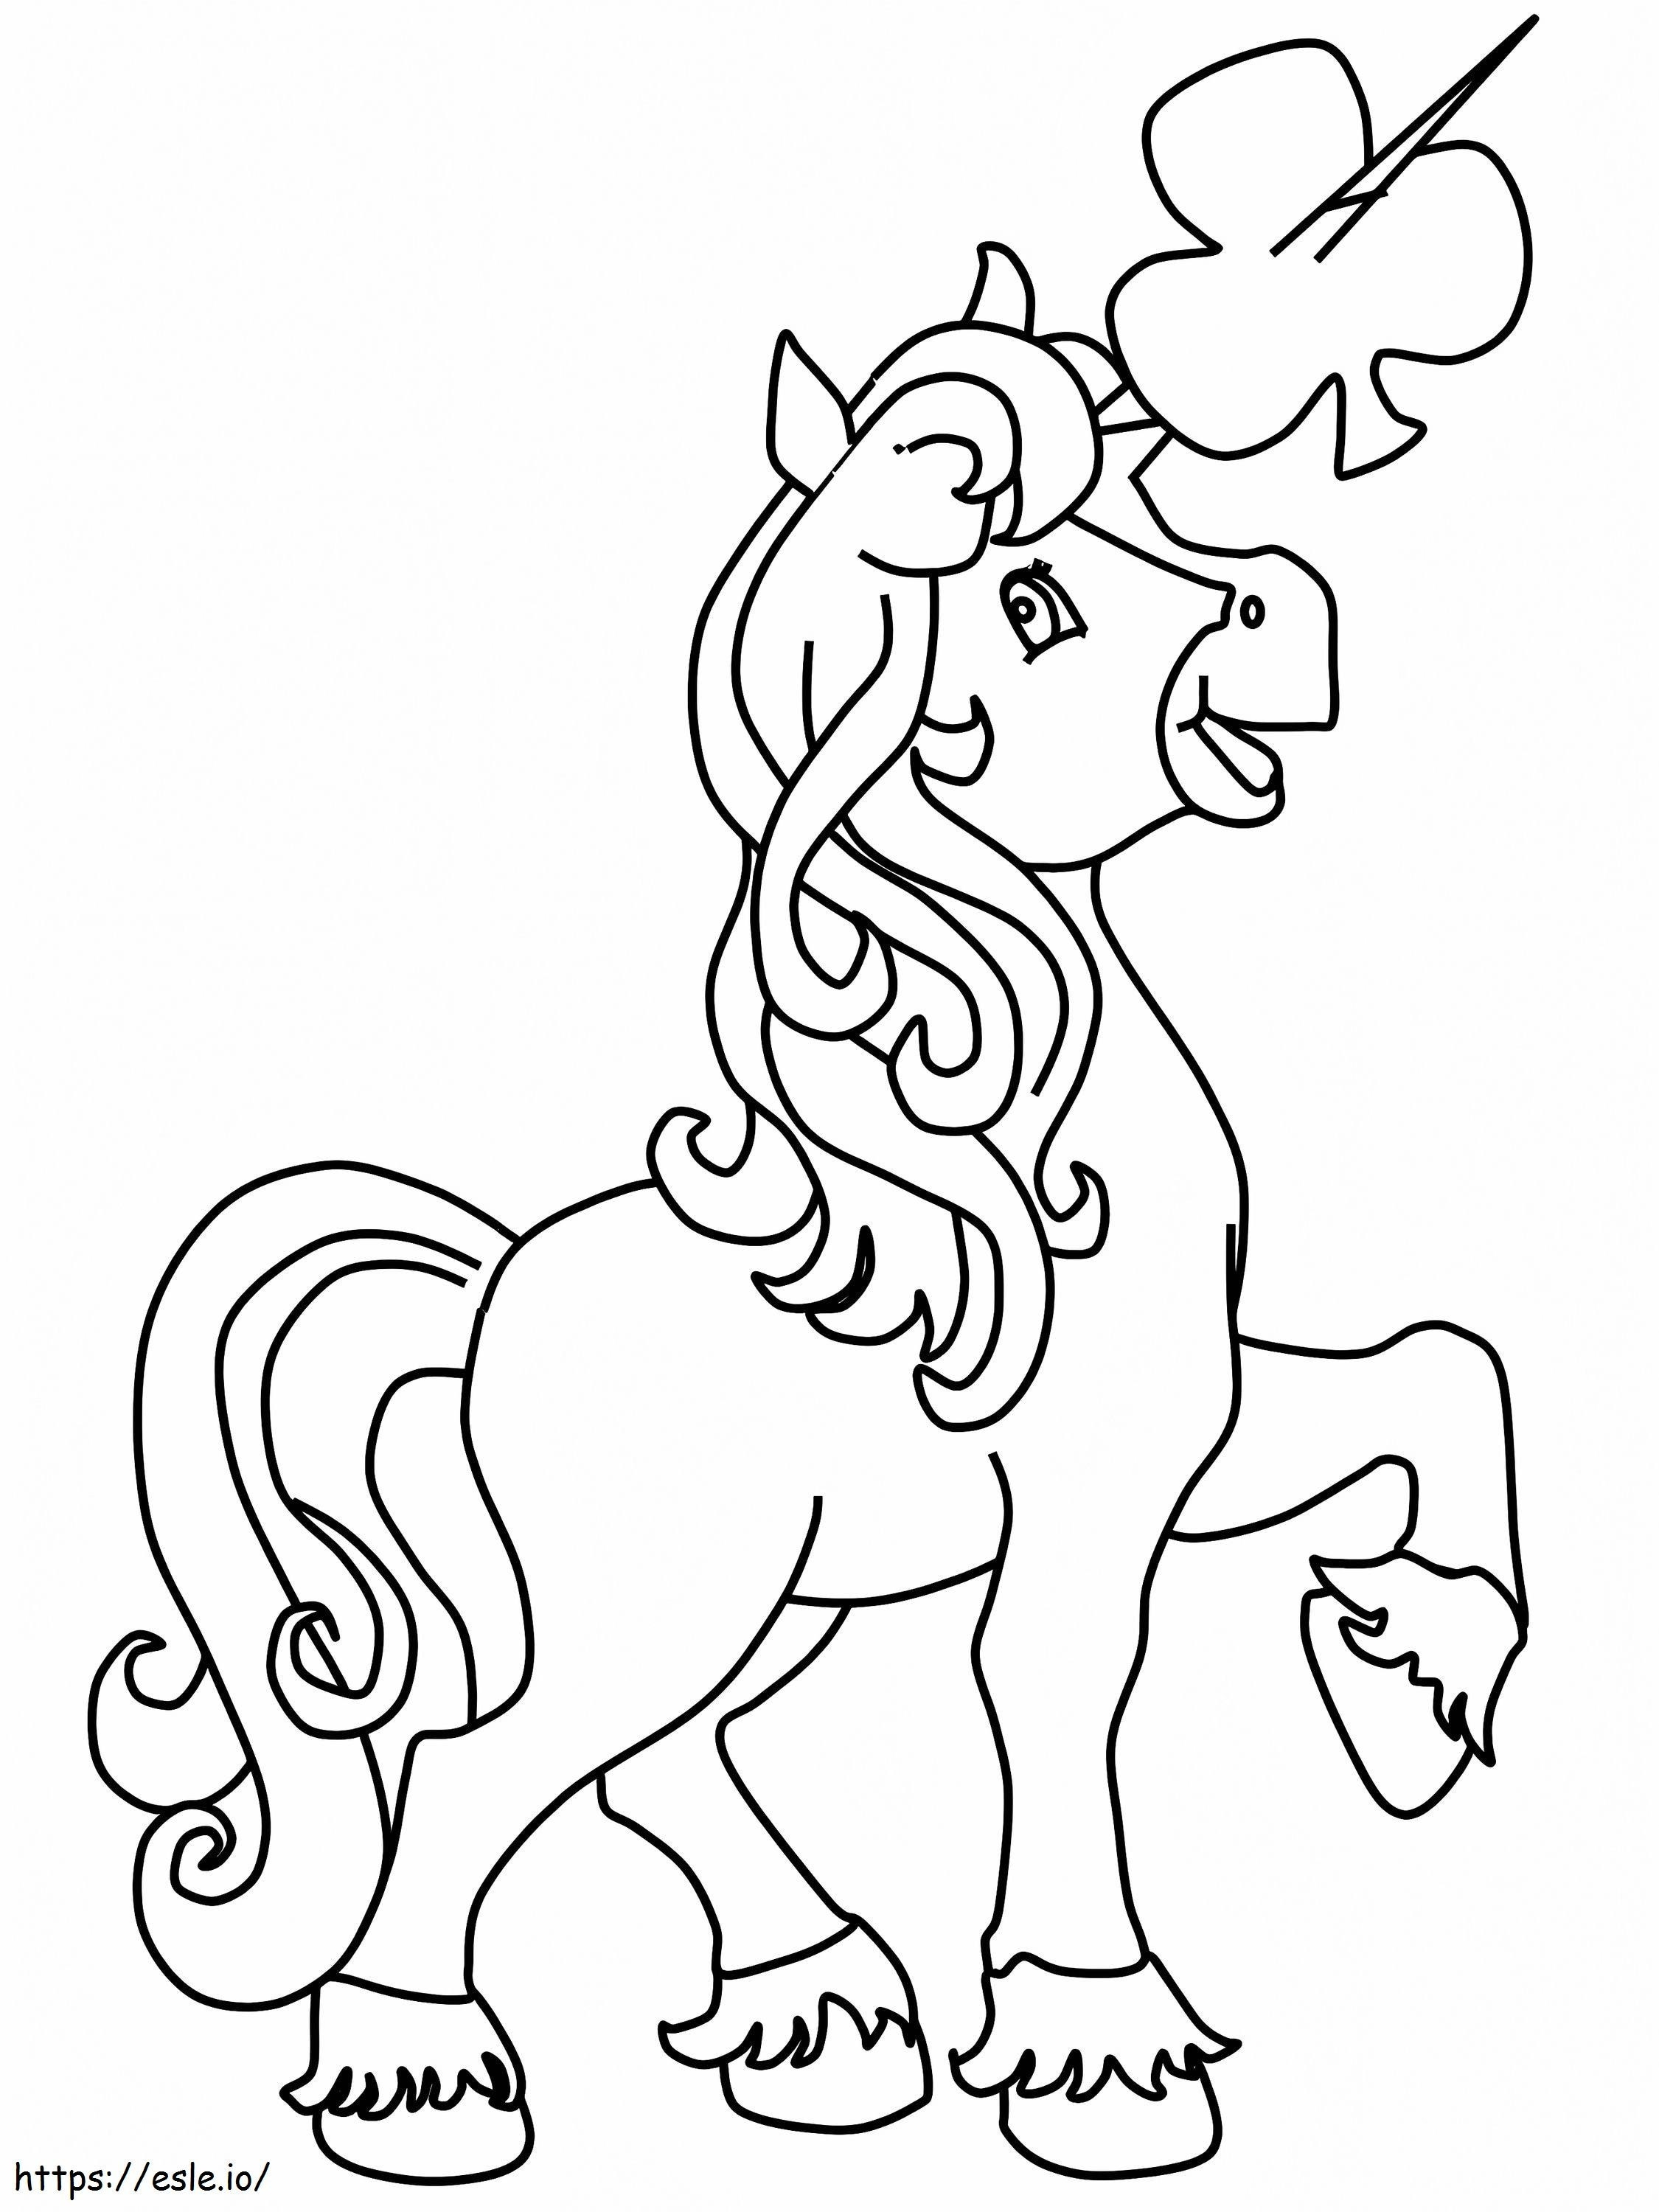 1545875837 Unicorn Patrick coloring page